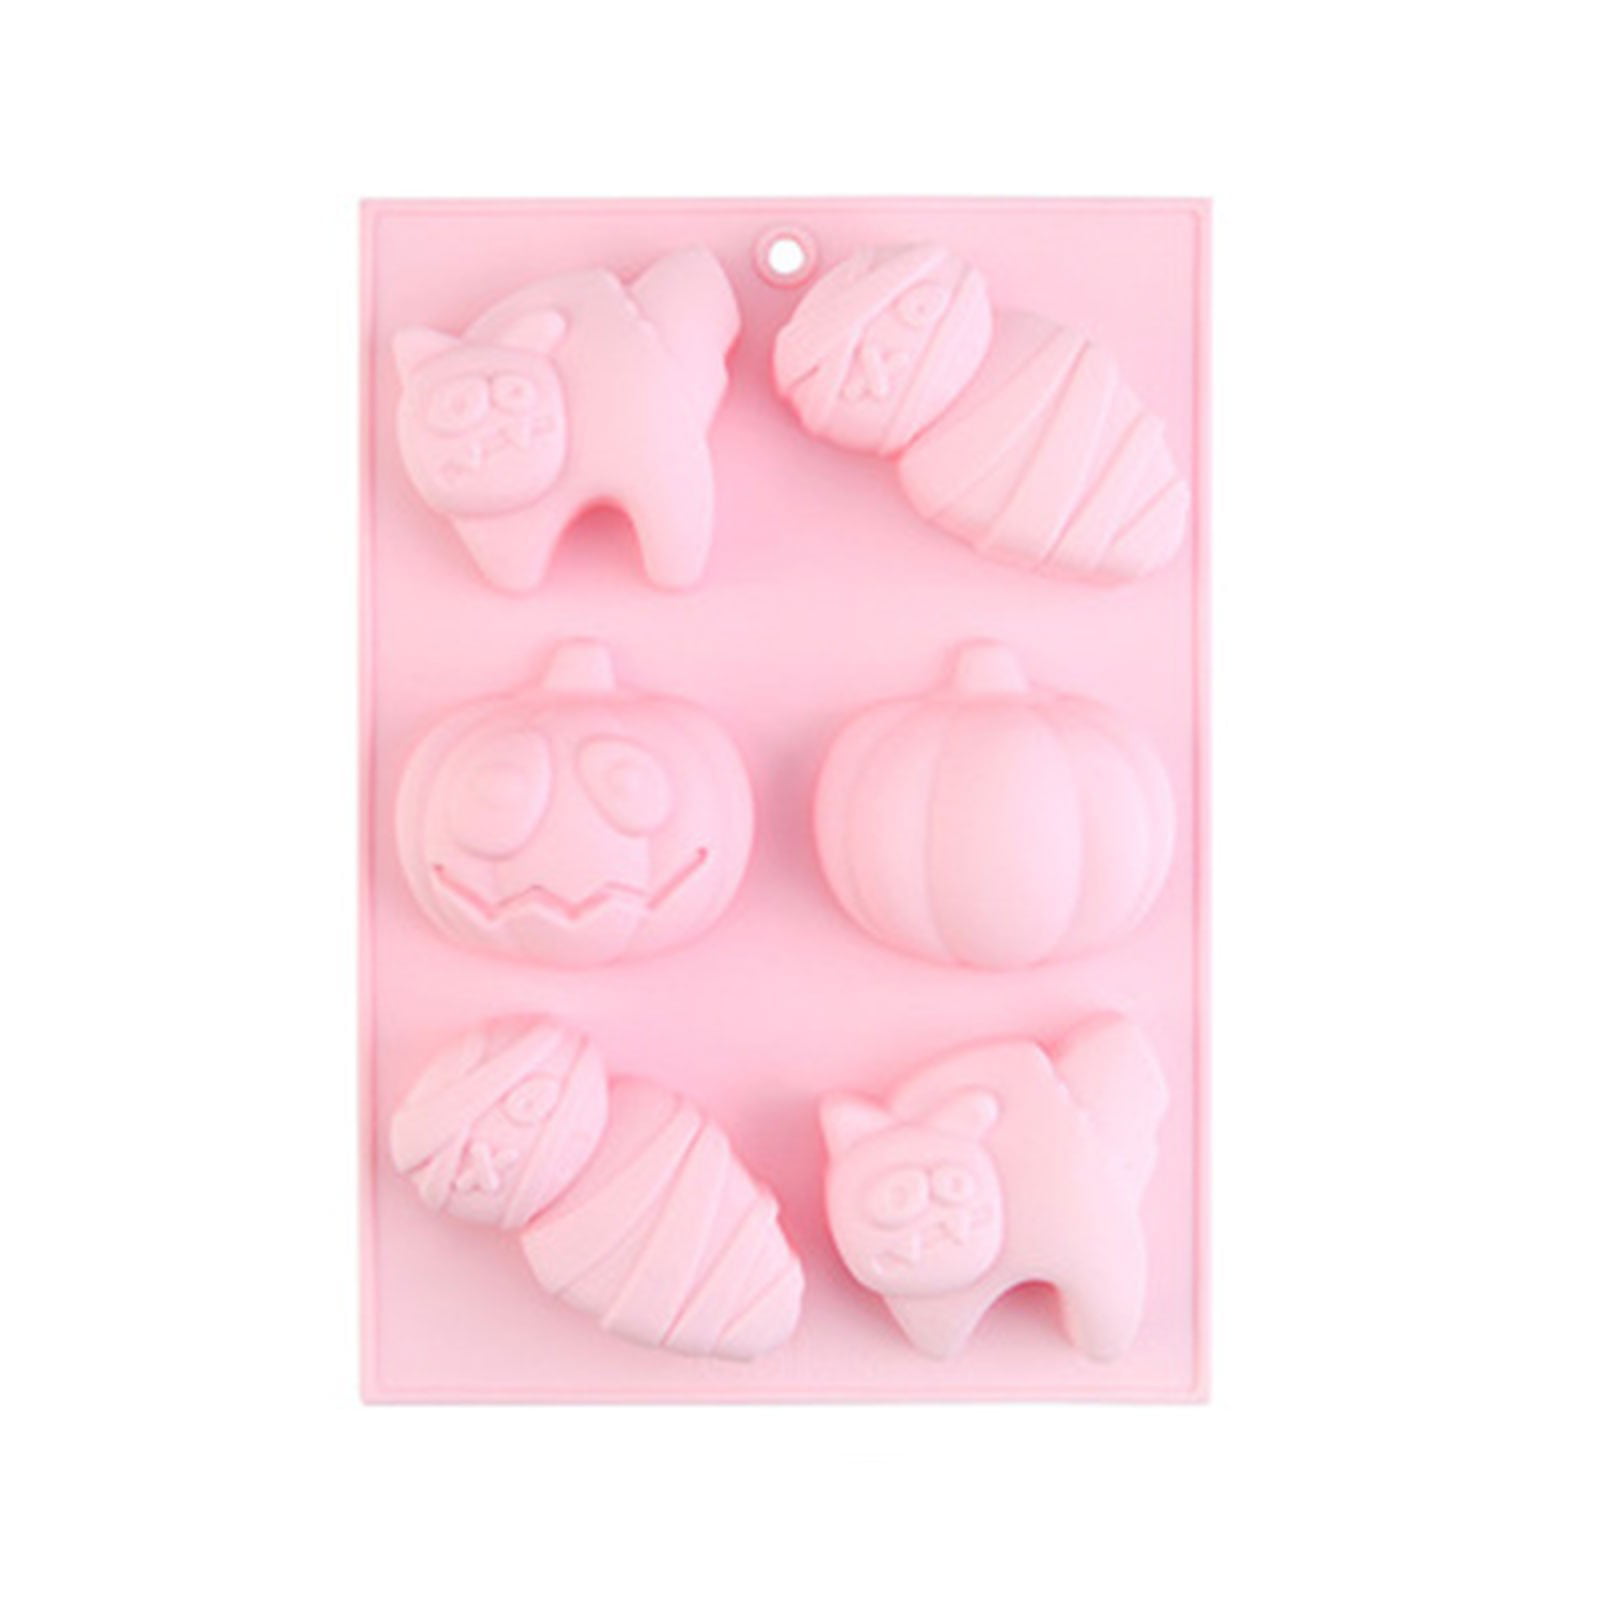 HENGSONG Pink 2 Bats Horror Halloween Silicone Turn Sugar Cake Decoration Molds DIY Baking Soap Kitchen Tools 